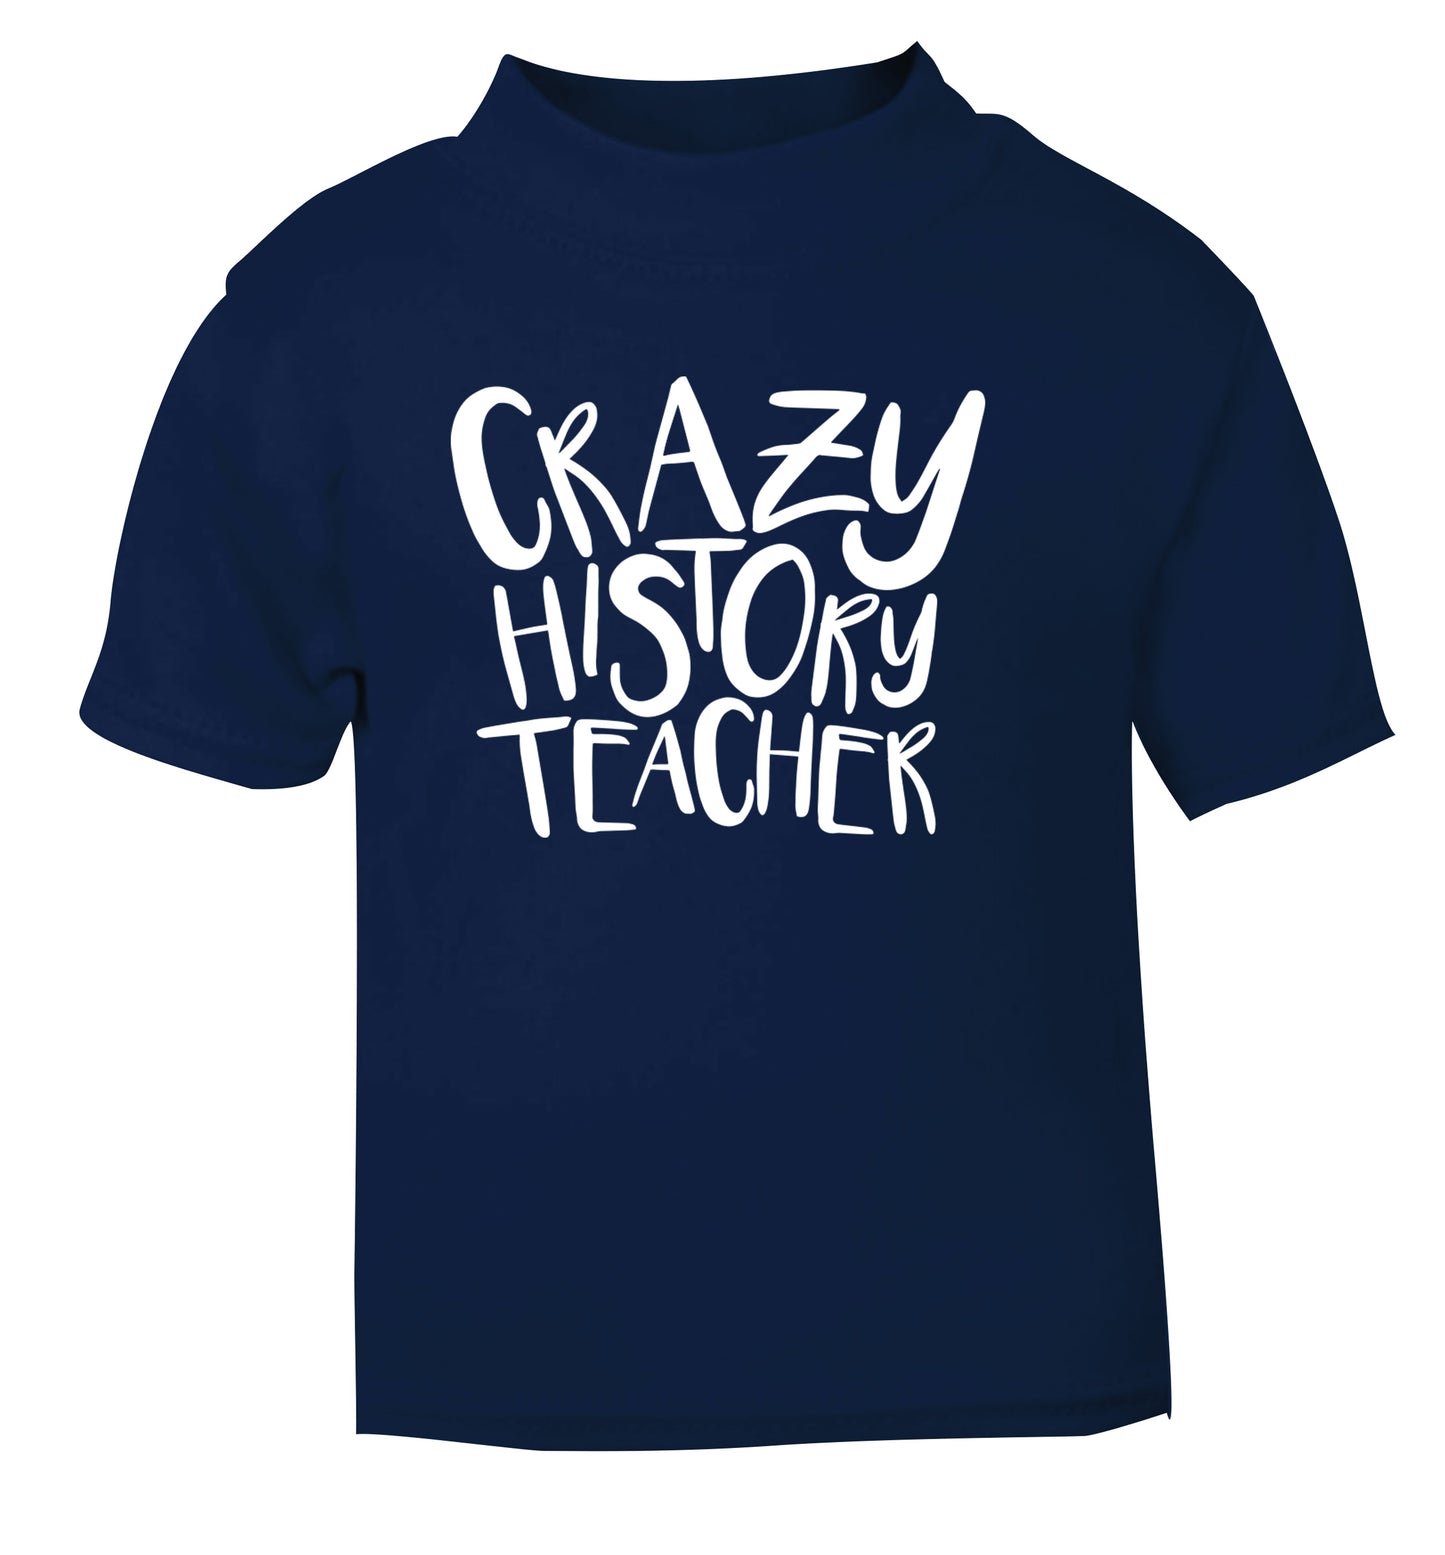 Crazy history teacher navy Baby Toddler Tshirt 2 Years